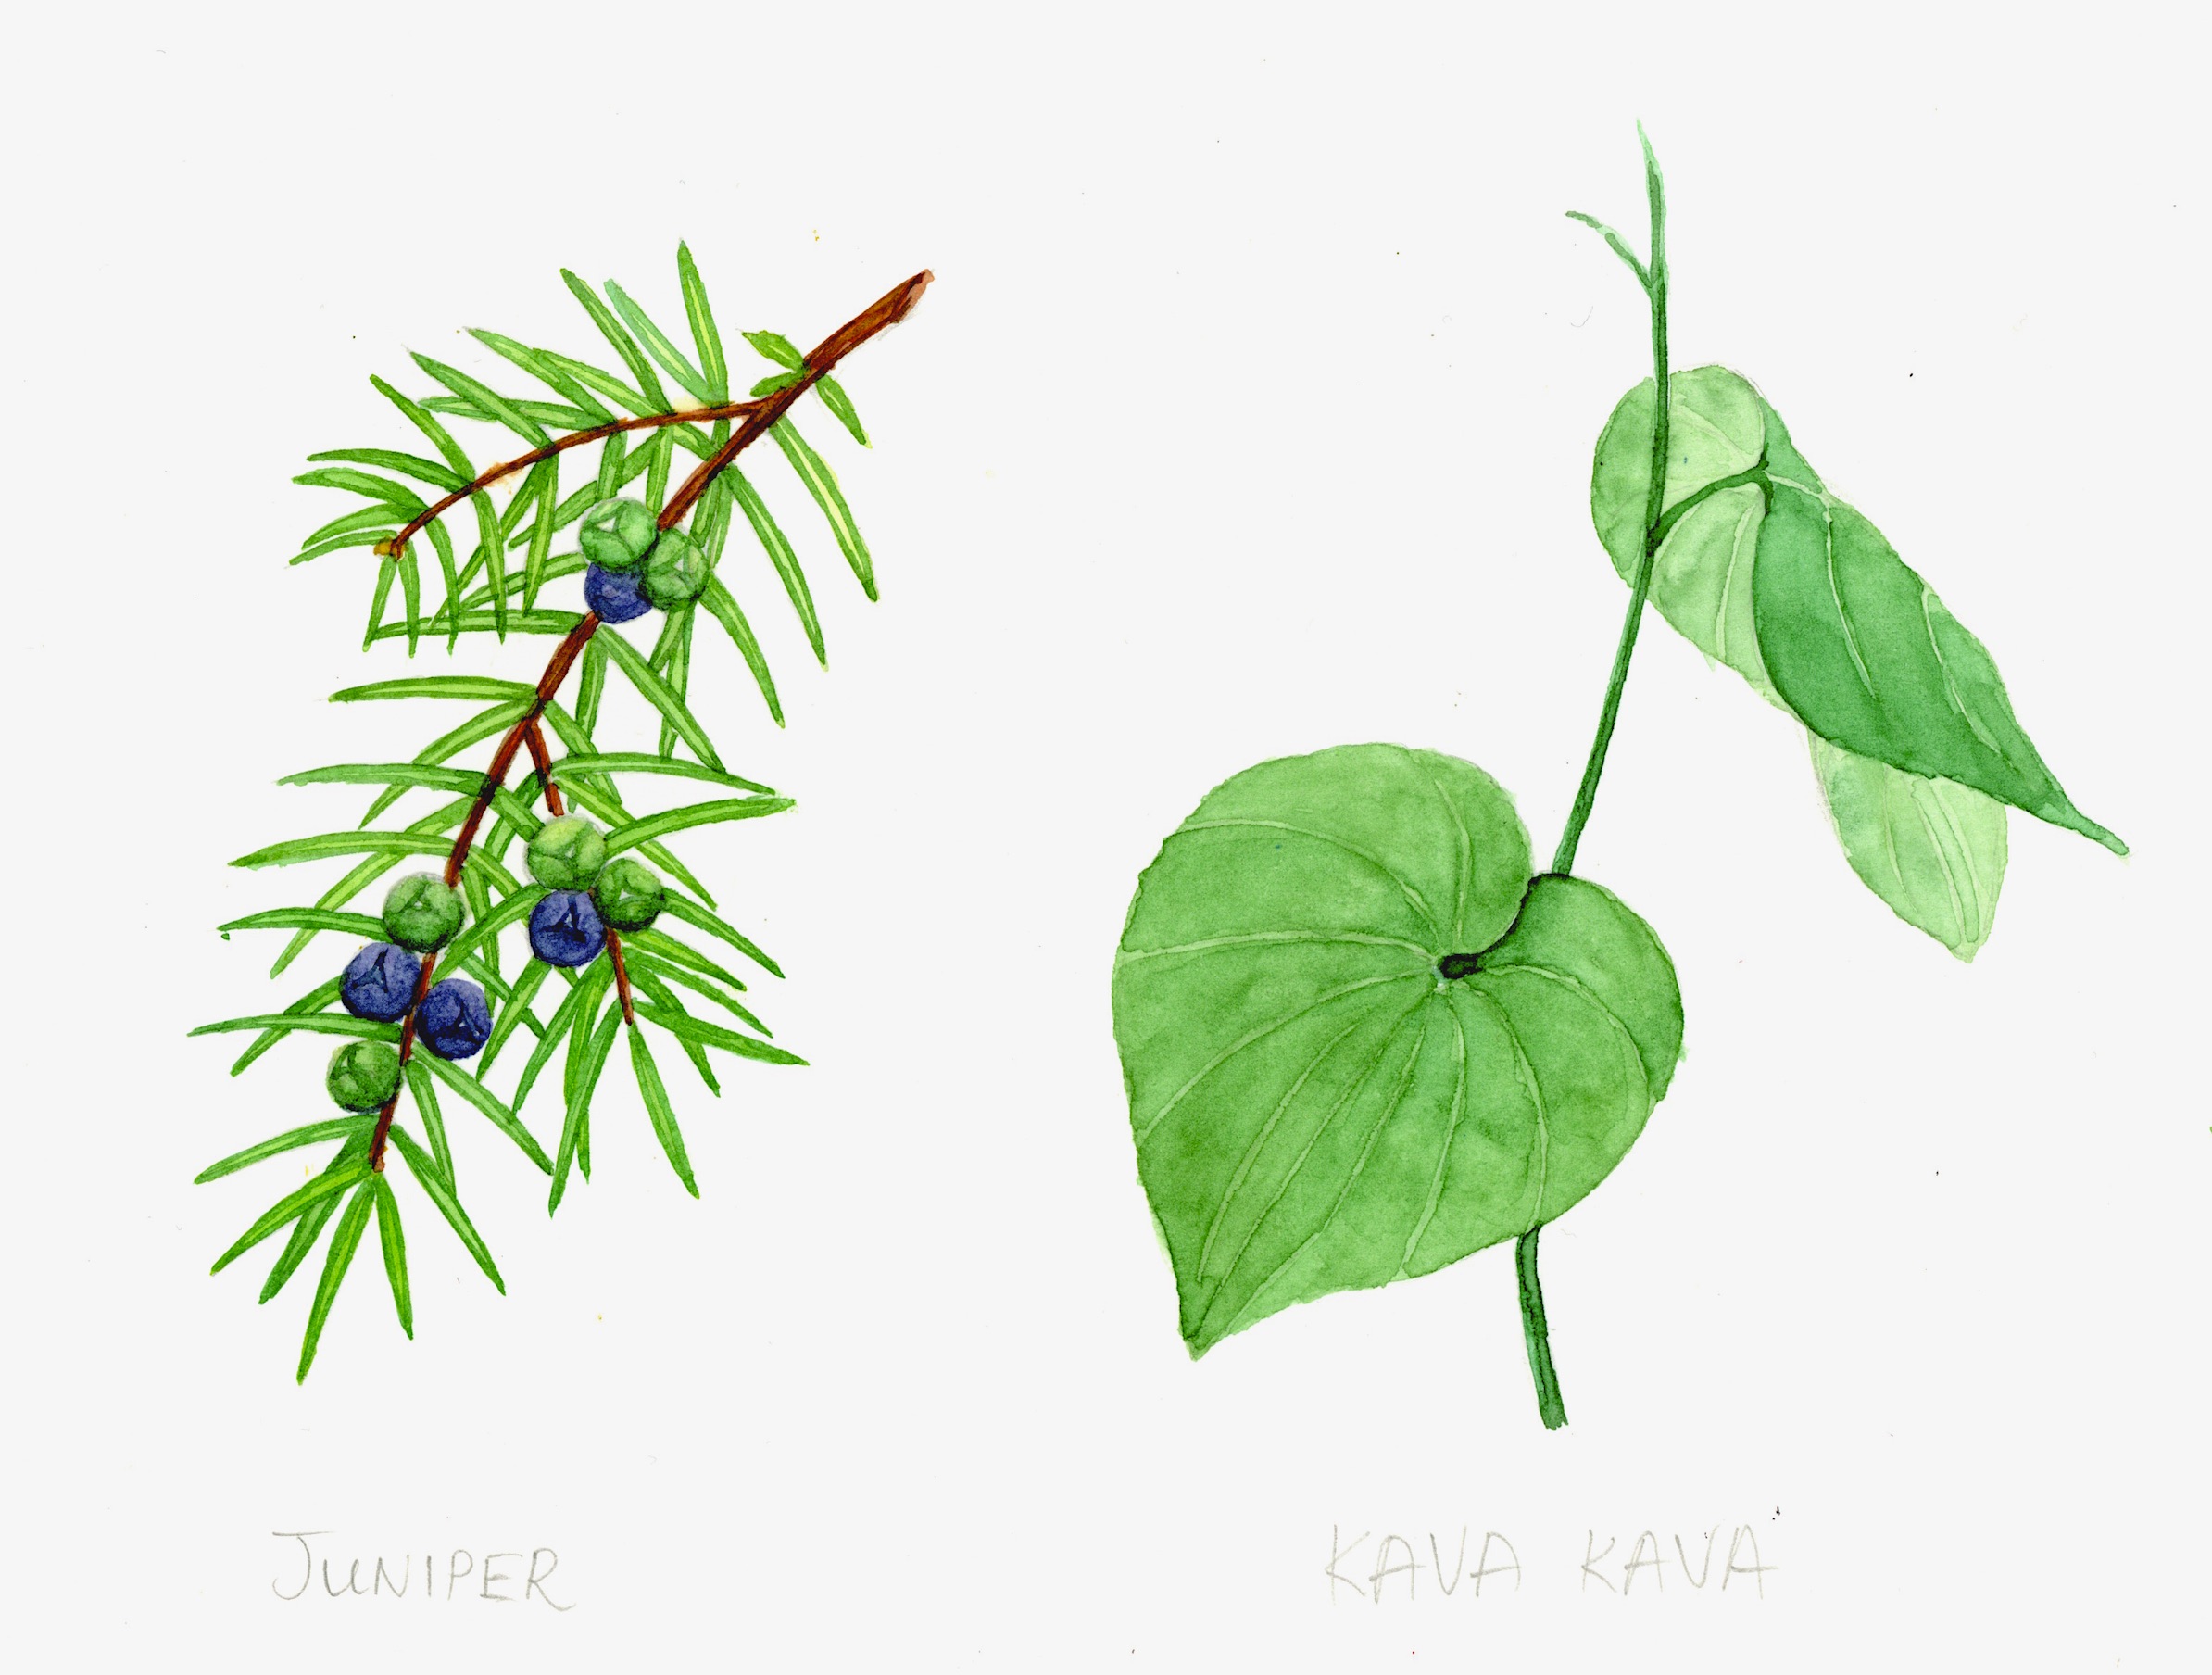 Juniper and Kava Kava Botanical Illustrations